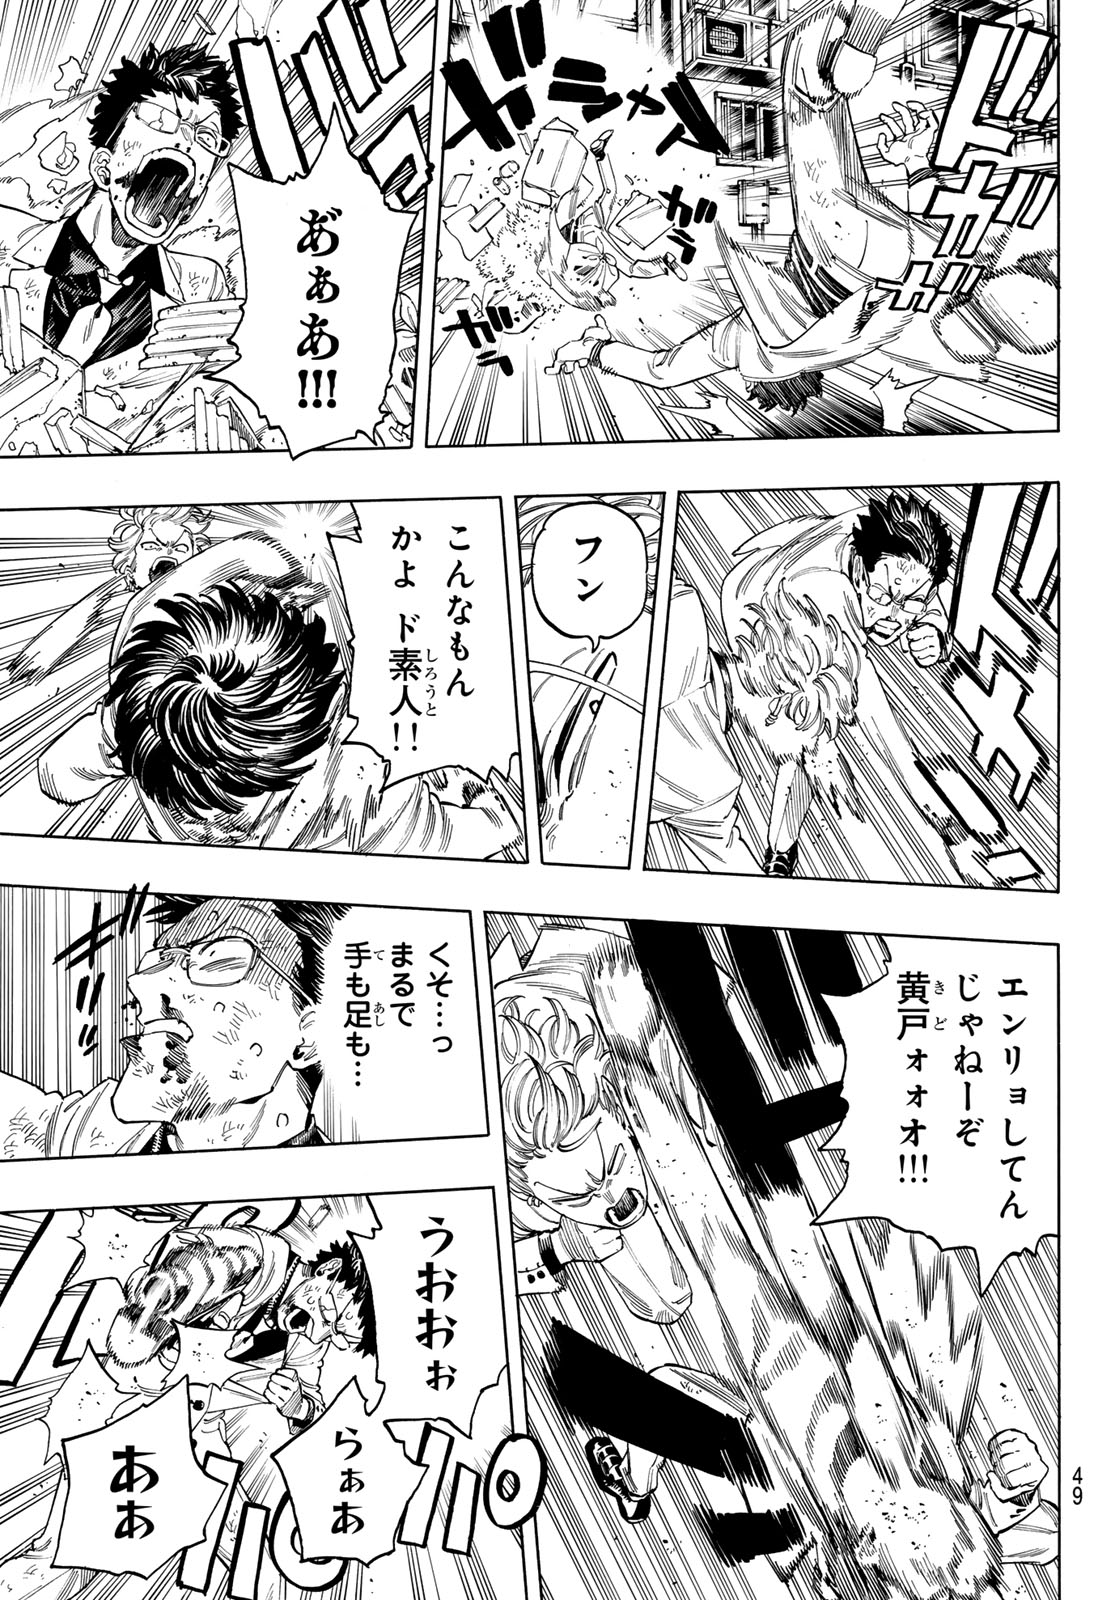 Akabane Honeko no Bodyguard - Chapter 79 - Page 3